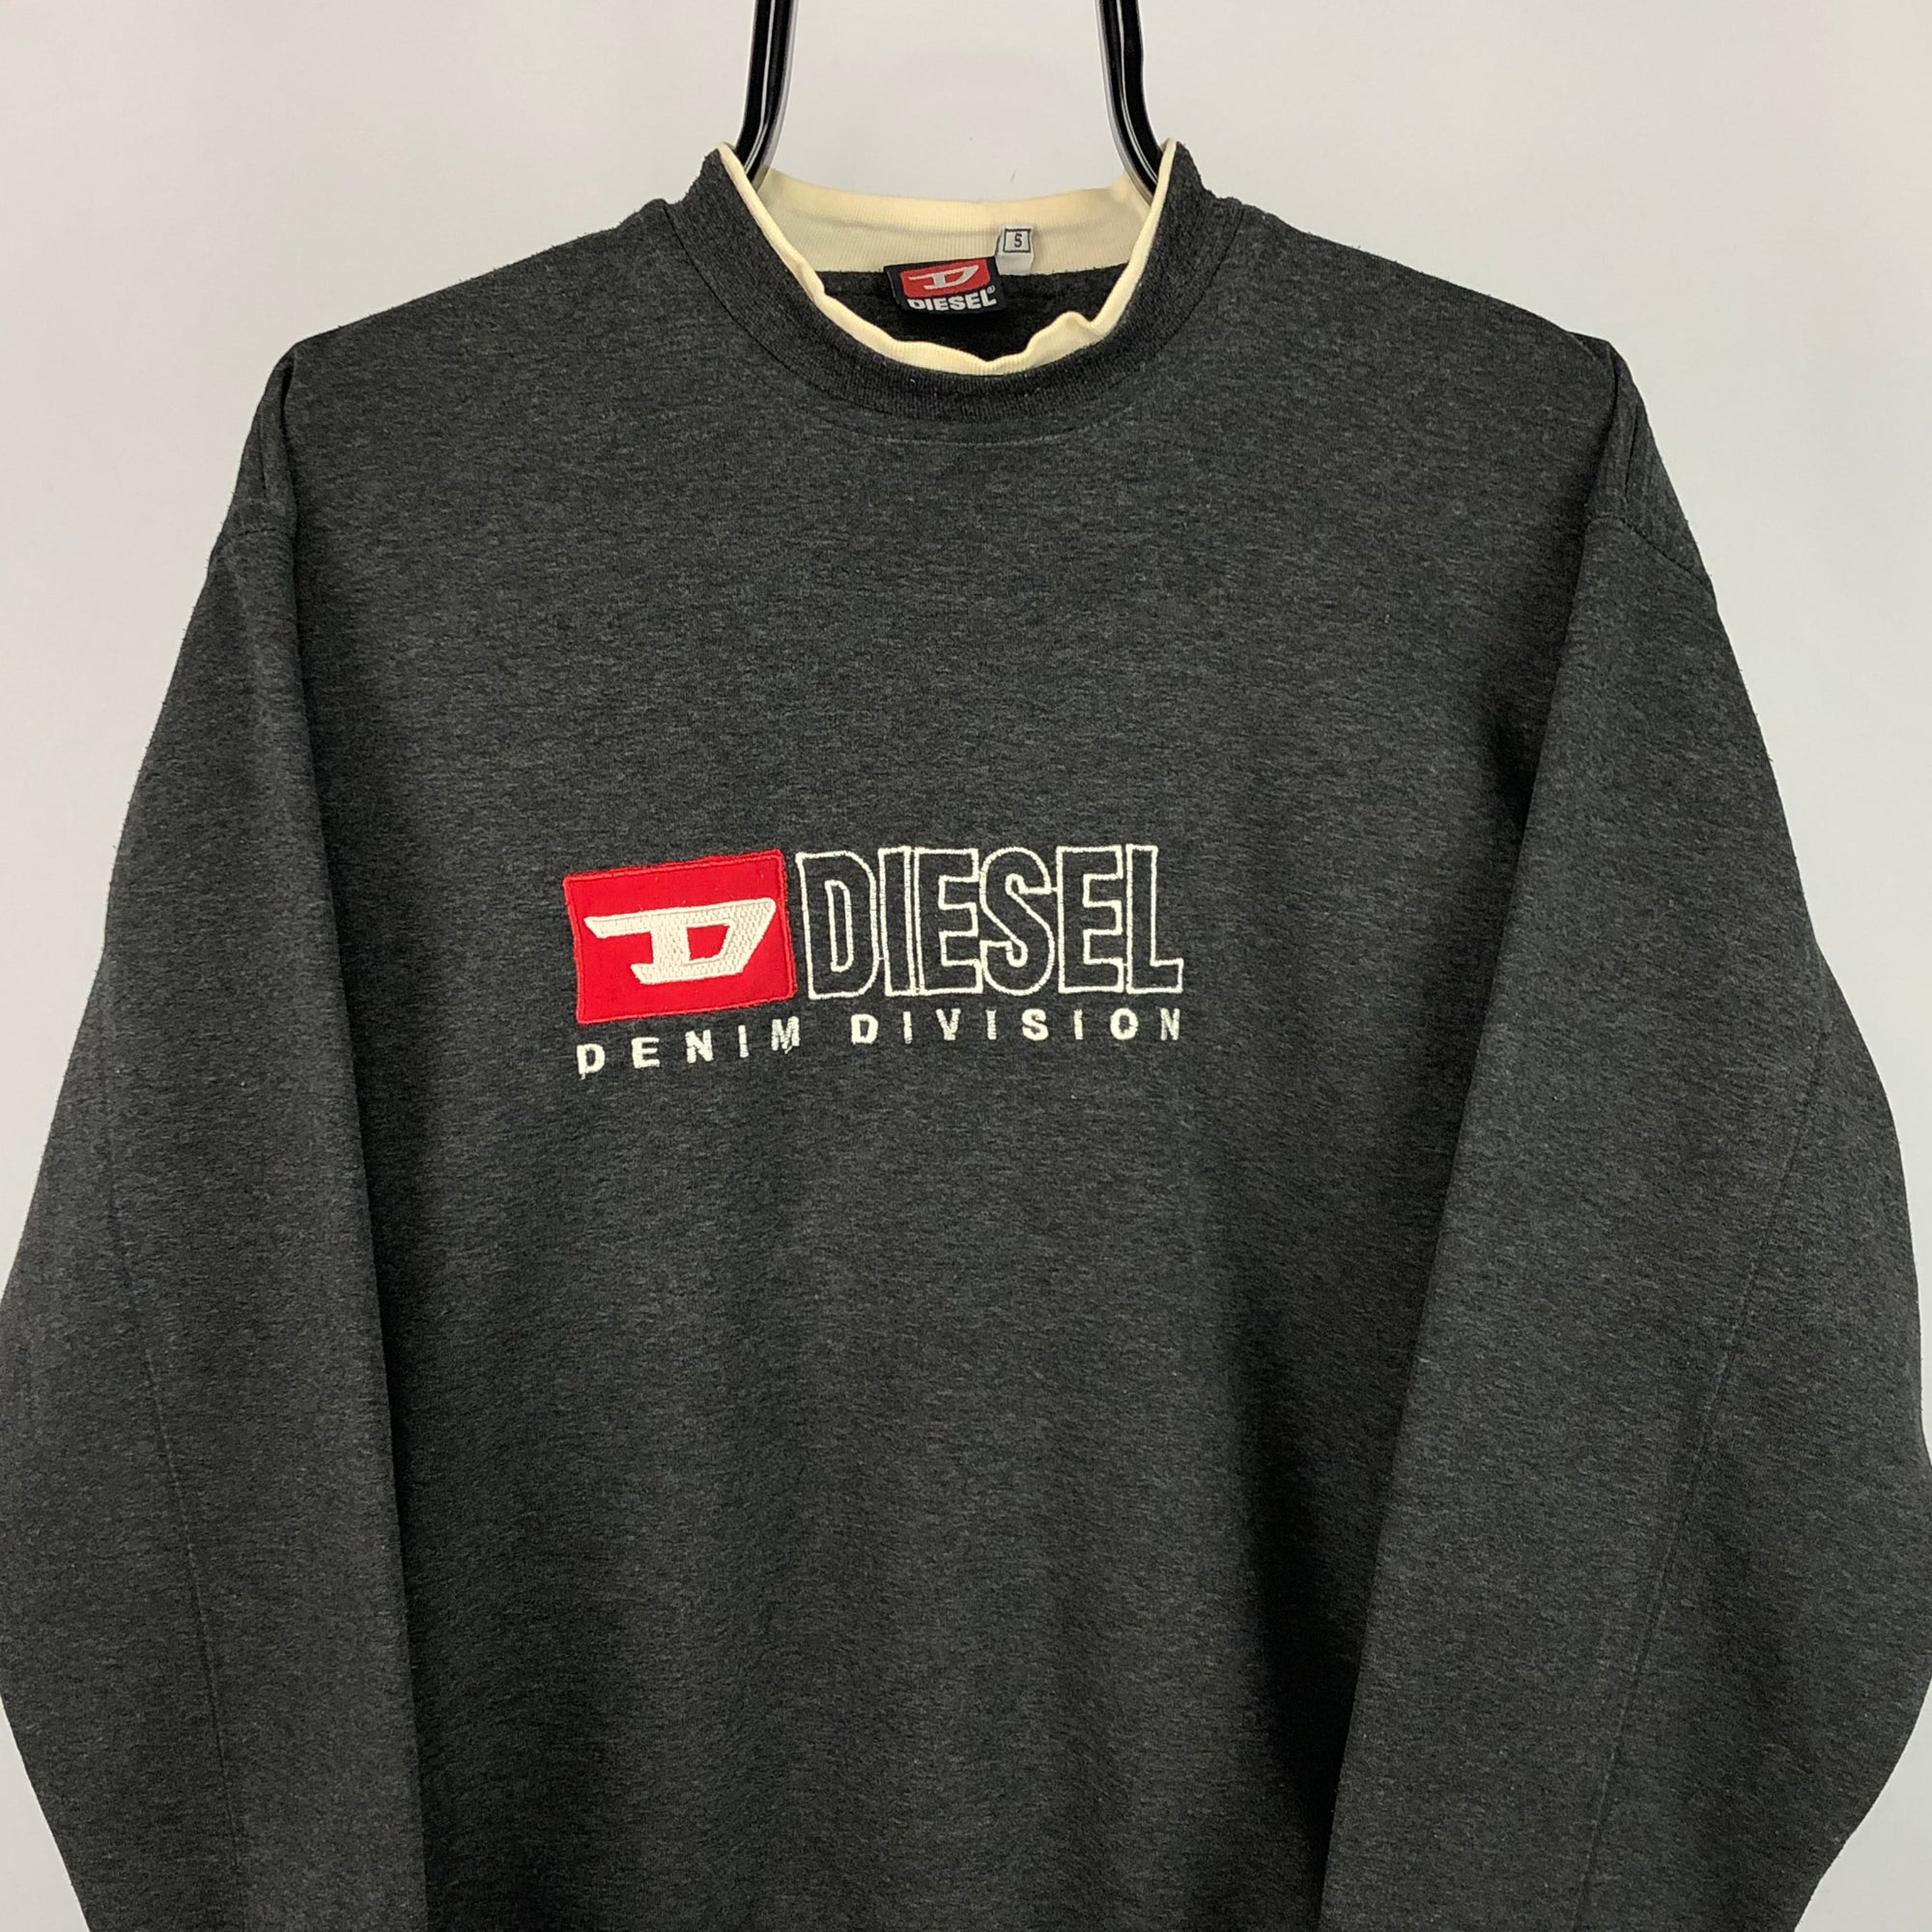 Vintage 90s Diesel Spellout Sweatshirt in Charcoal - Men's Small/Women's Medium